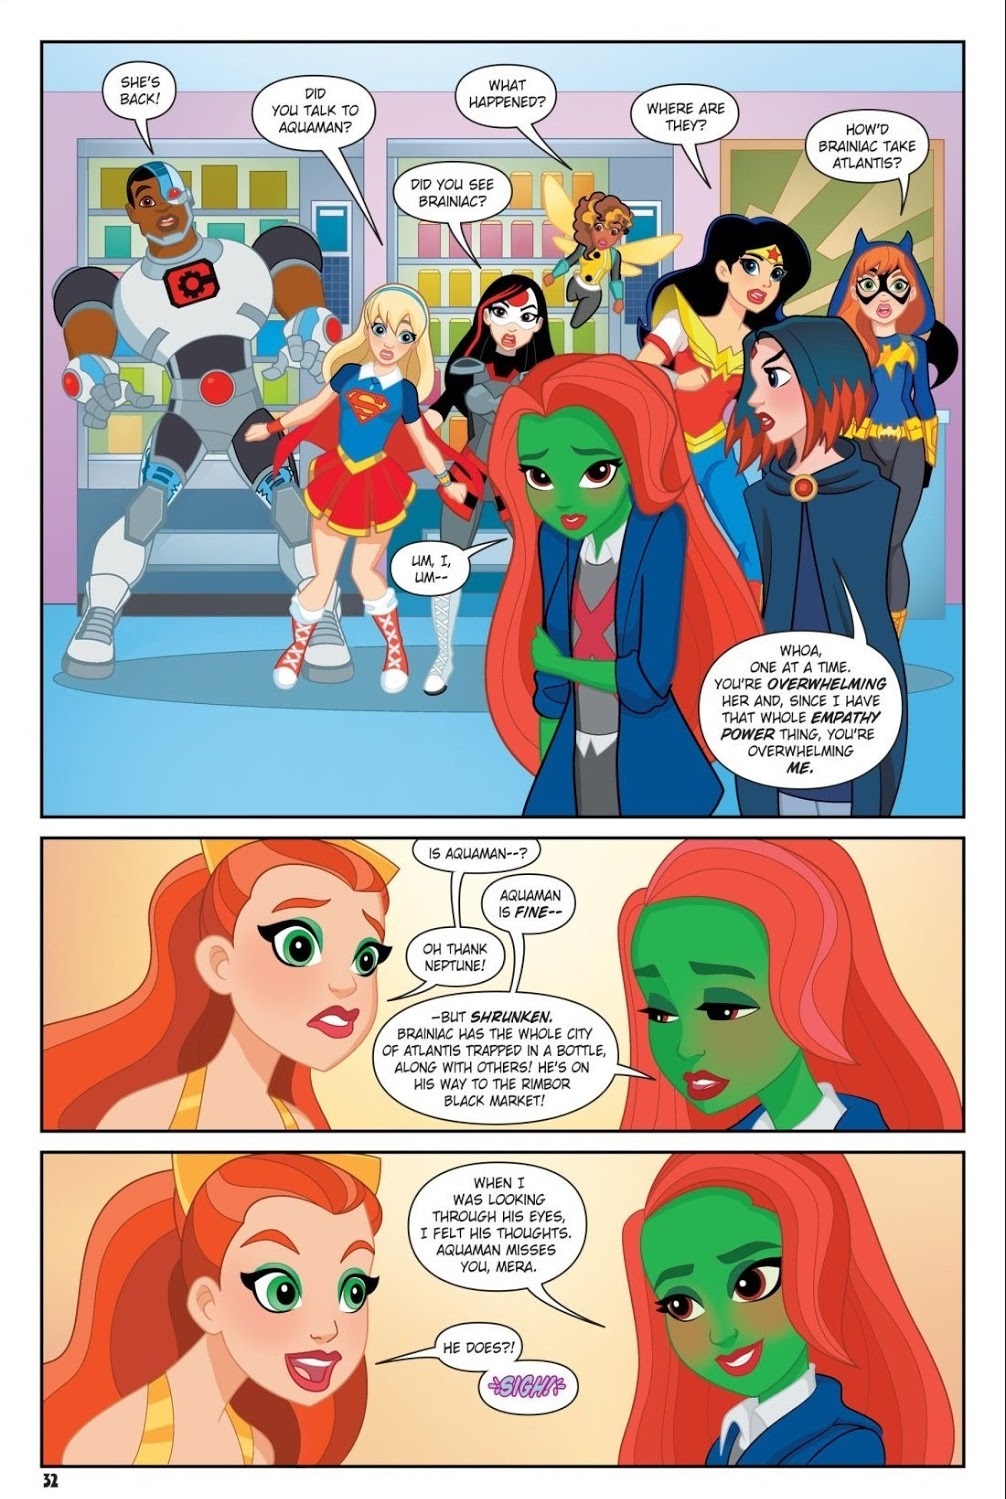 DC Superhero Girls Search for Atlantis review